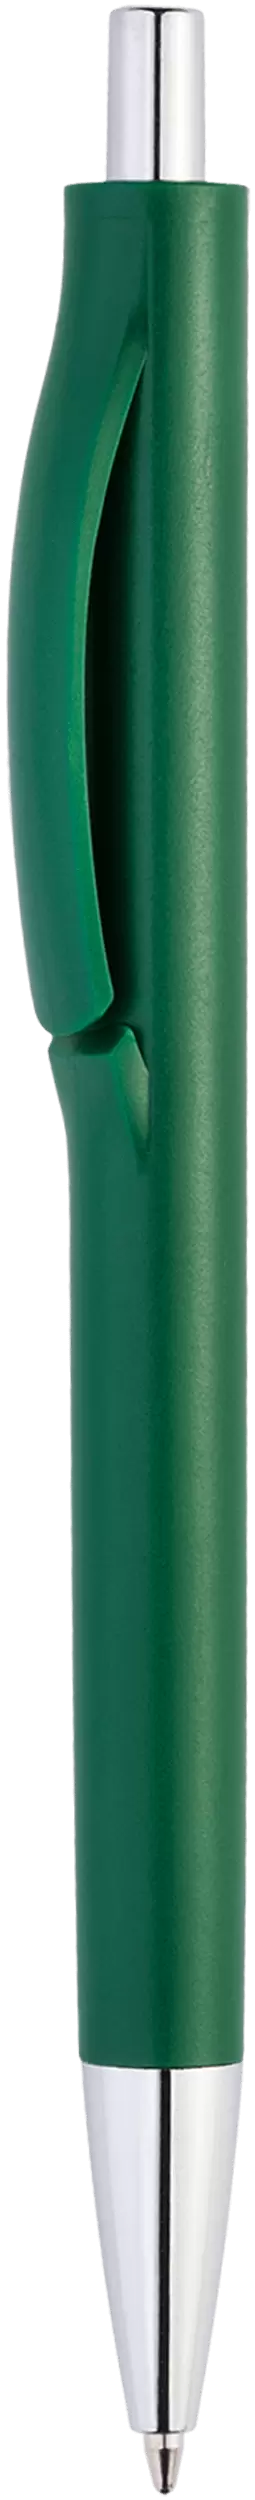 Ручка IGLA CHROME Зеленая 1032.02